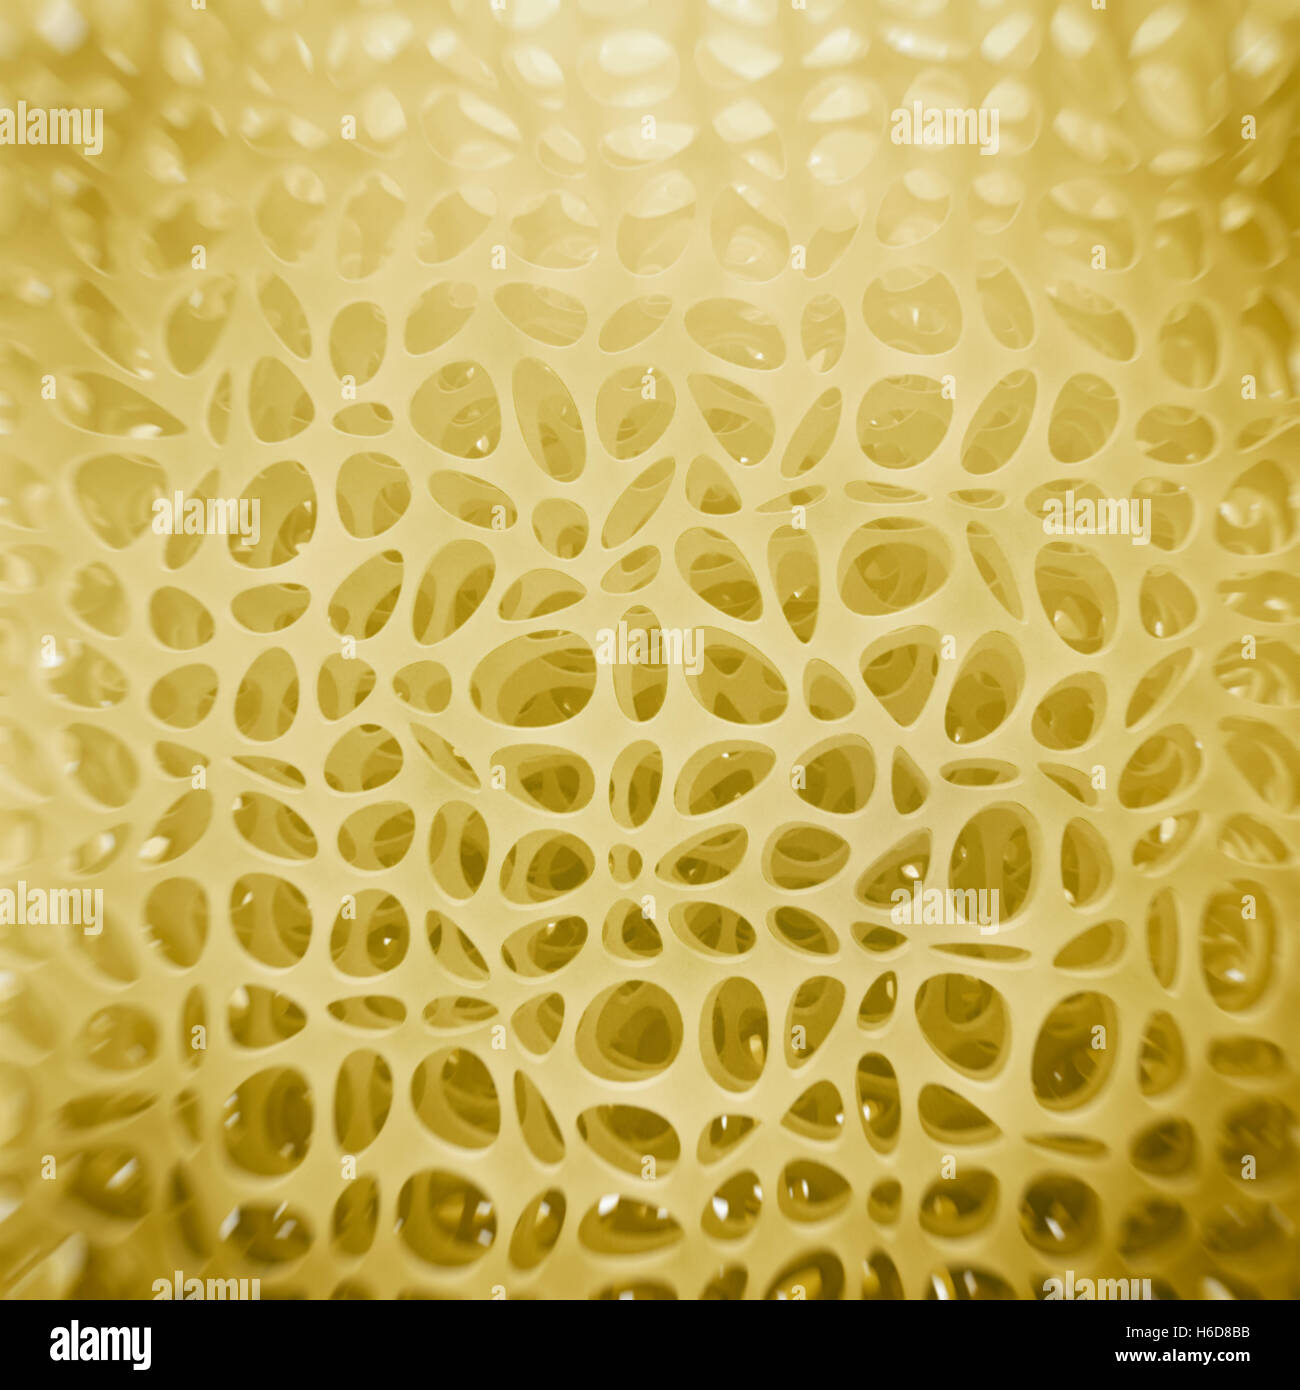 Bone spongy structure illustration - 3D Rendering Stock Photo